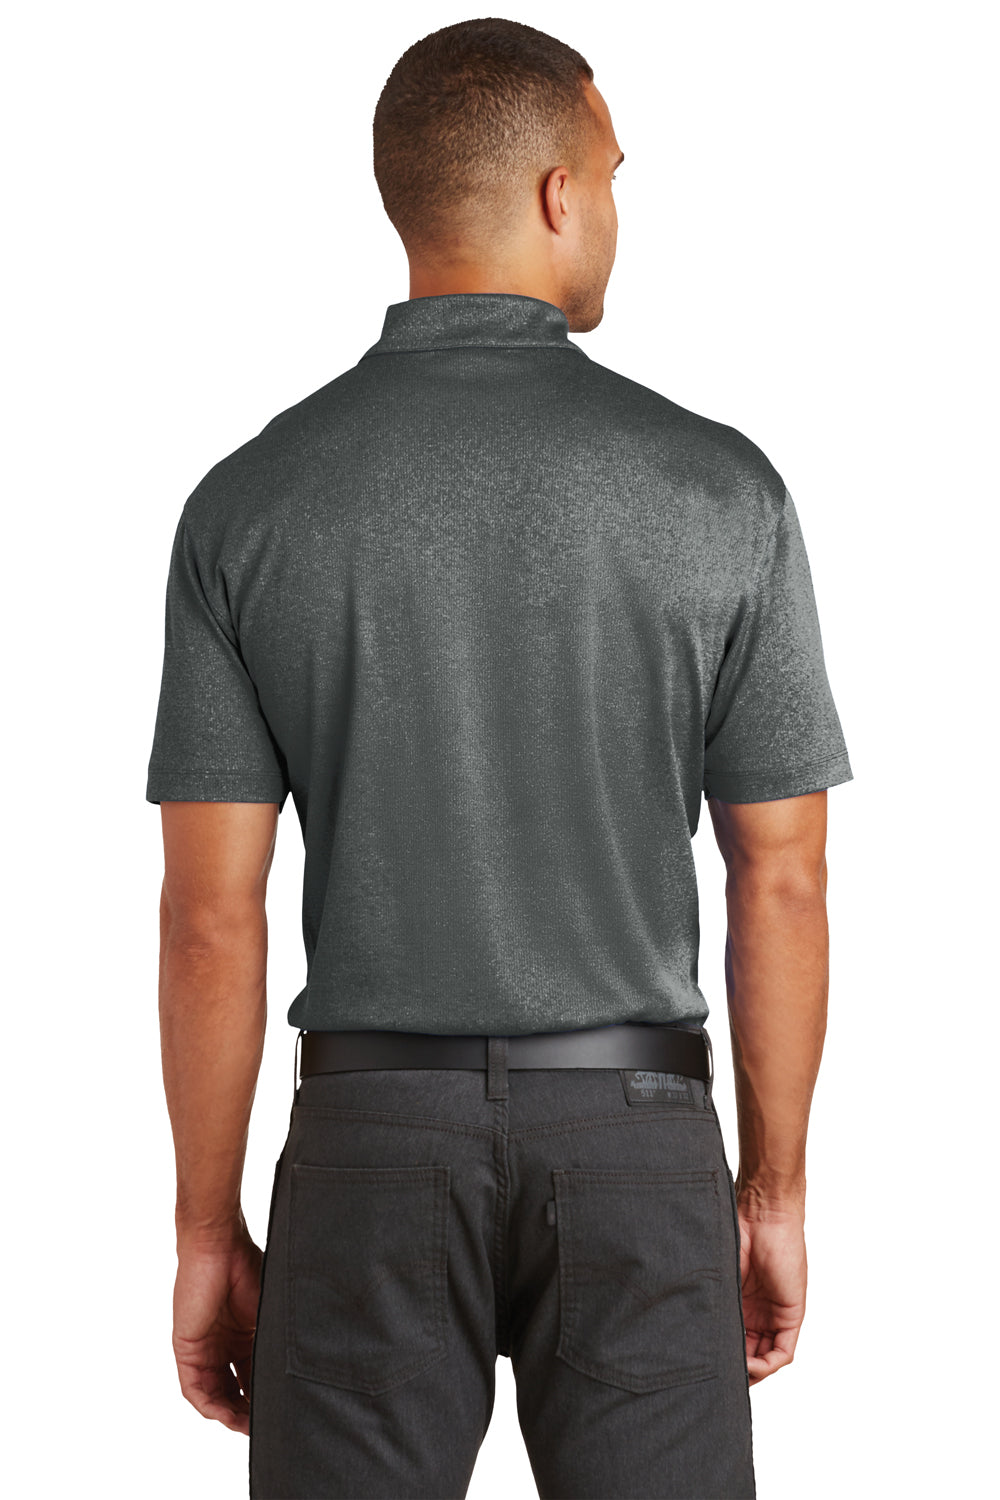 Port Authority K576 Mens Trace Moisture Wicking Short Sleeve Polo Shirt Heather Charcoal Grey Back